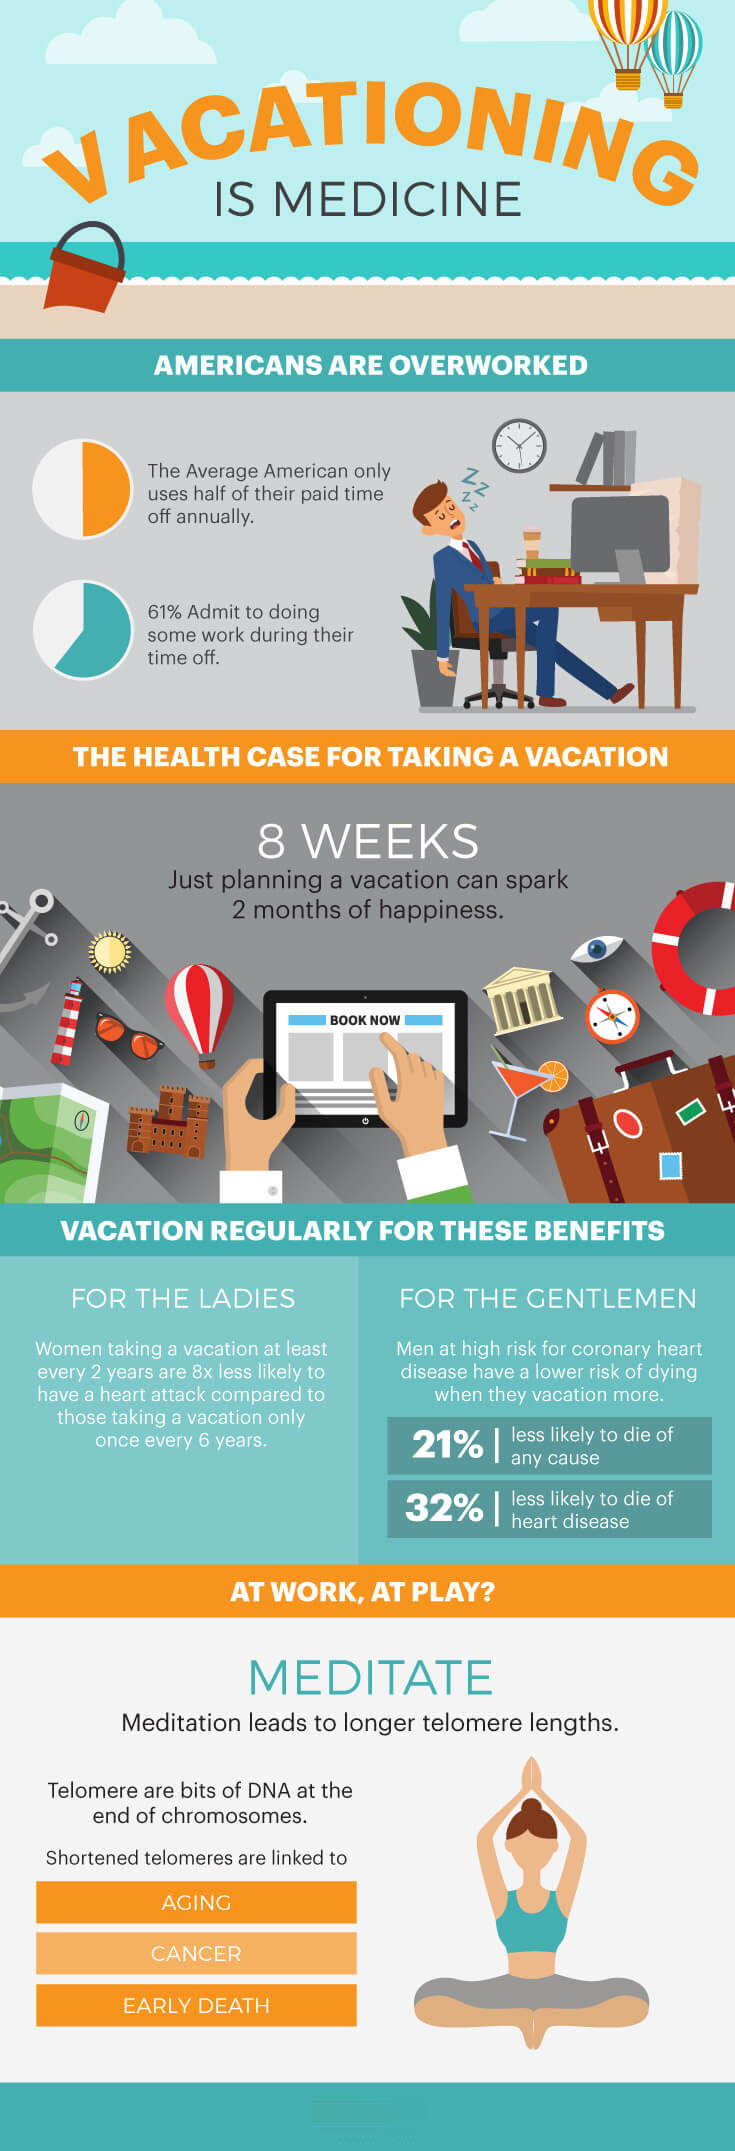 Vacation health benefits - MKexpress.net